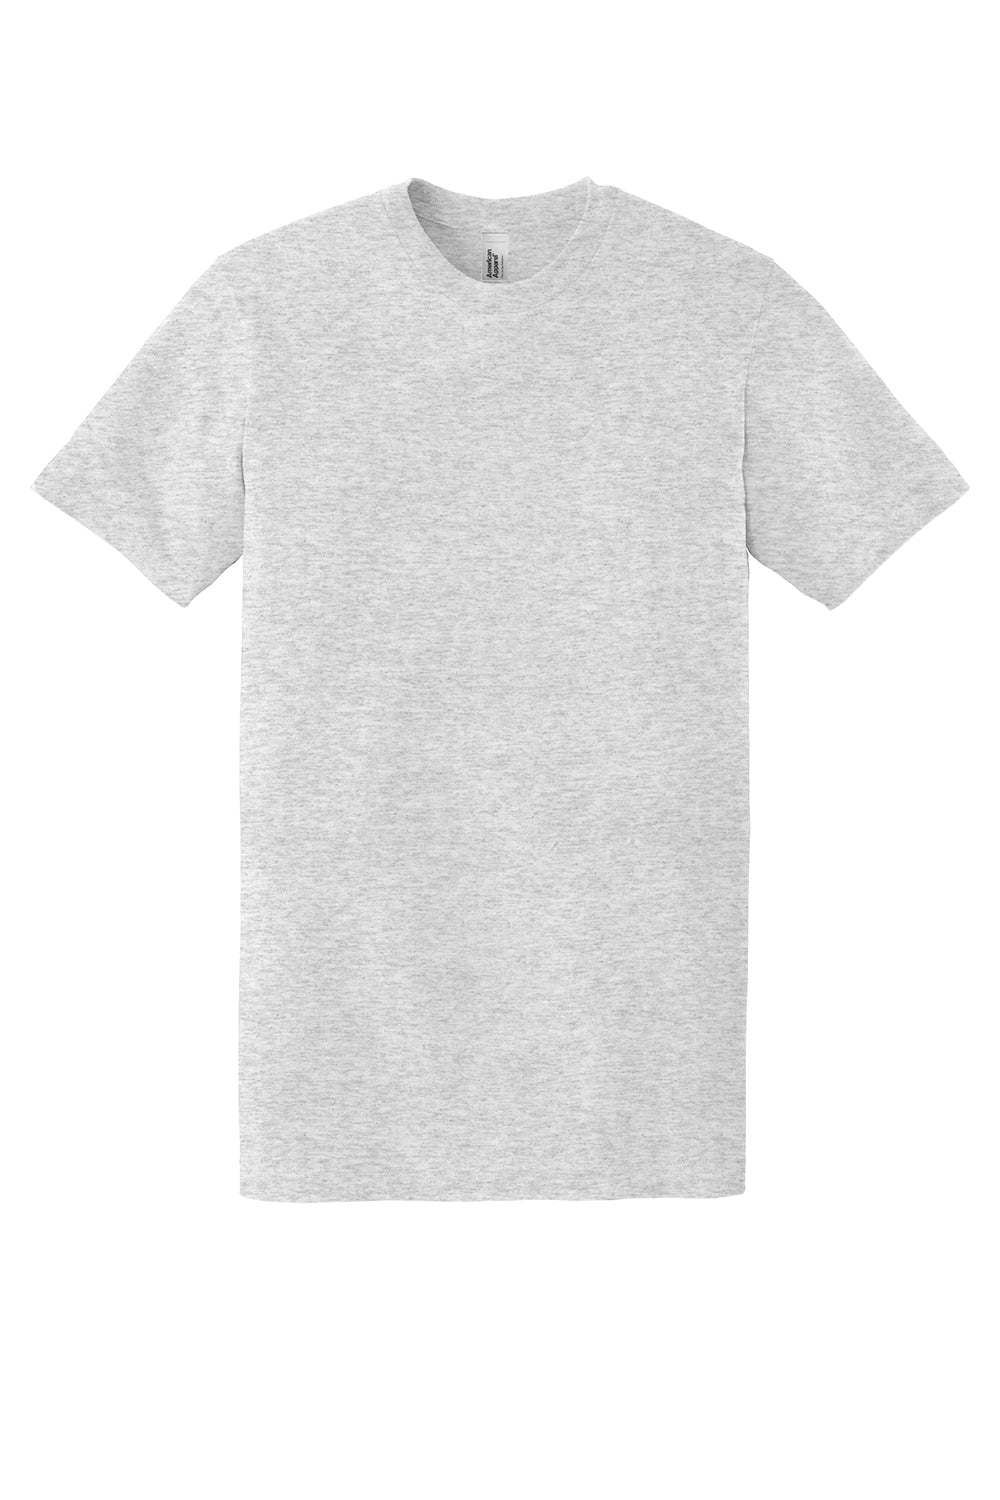 American Apparel 2001 Mens Fine Jersey Short Sleeve Crewneck T-Shirt Ash Grey Flat Front